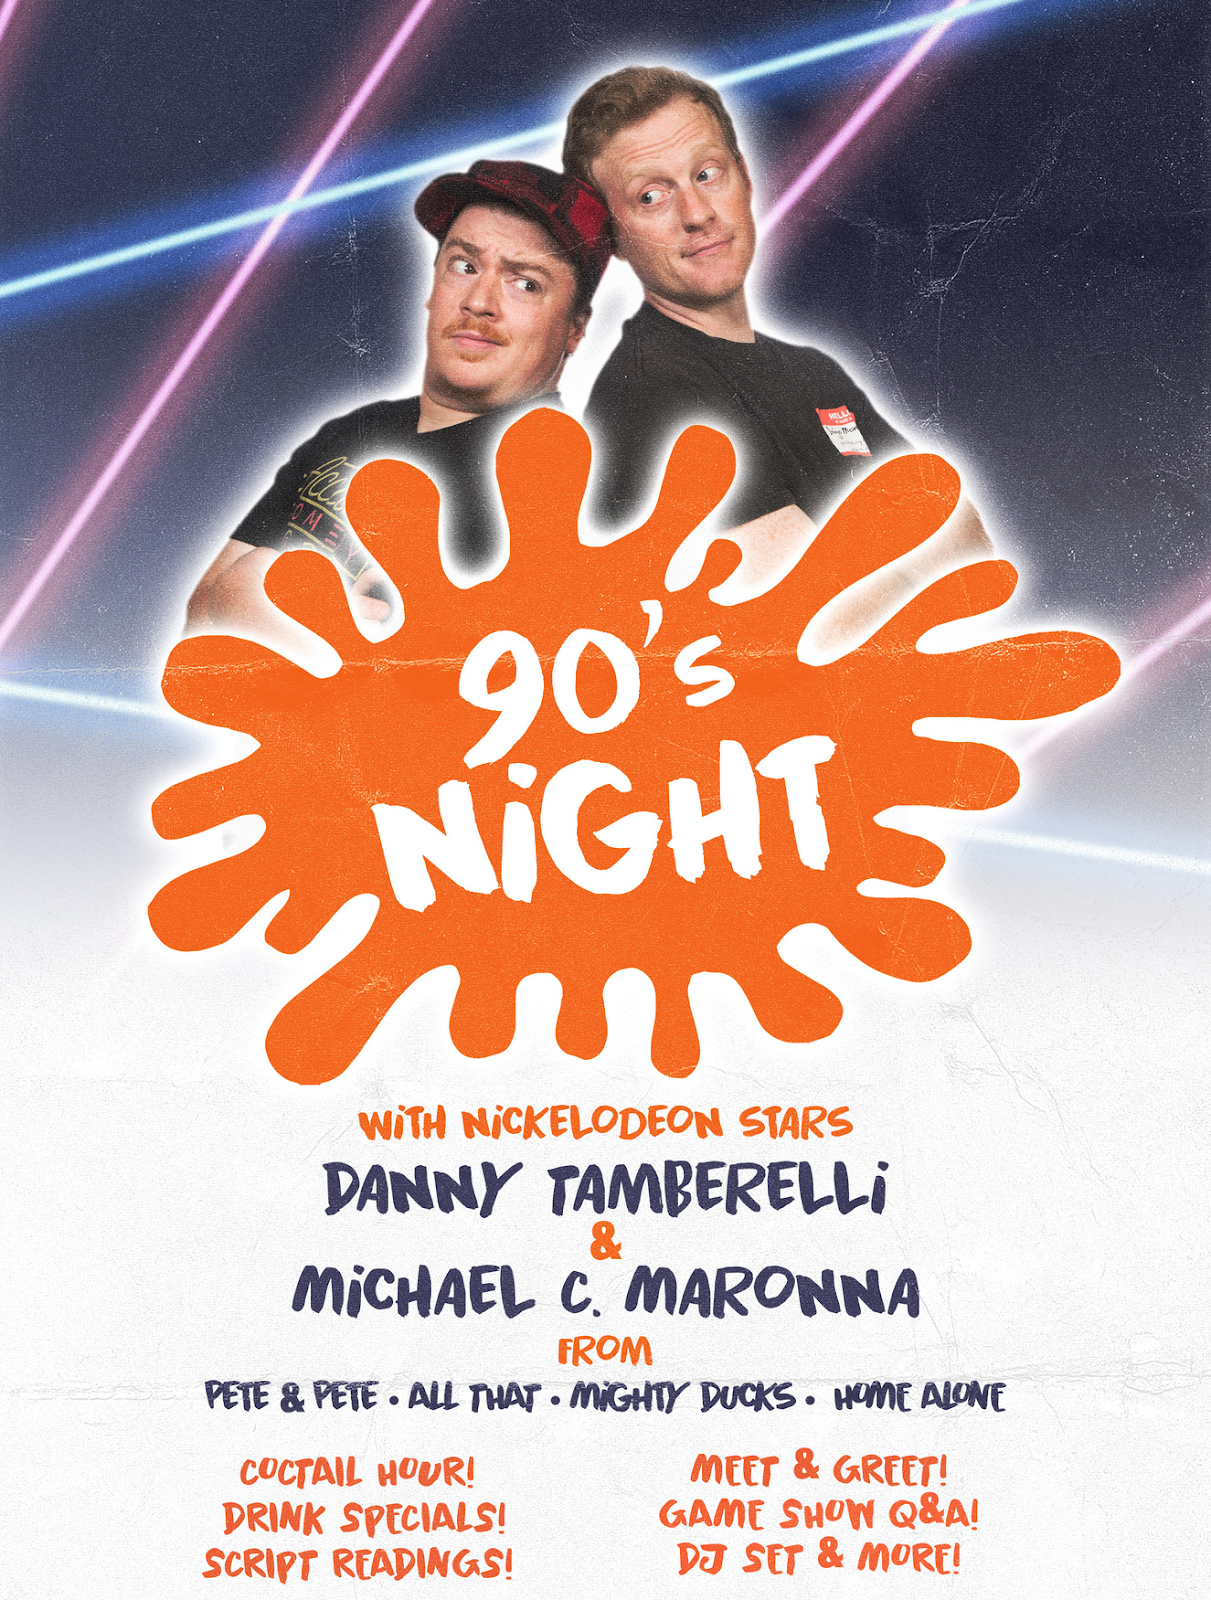 Danny Tamberelli and Michael C. Maronna Announce '90s Night' Tour...